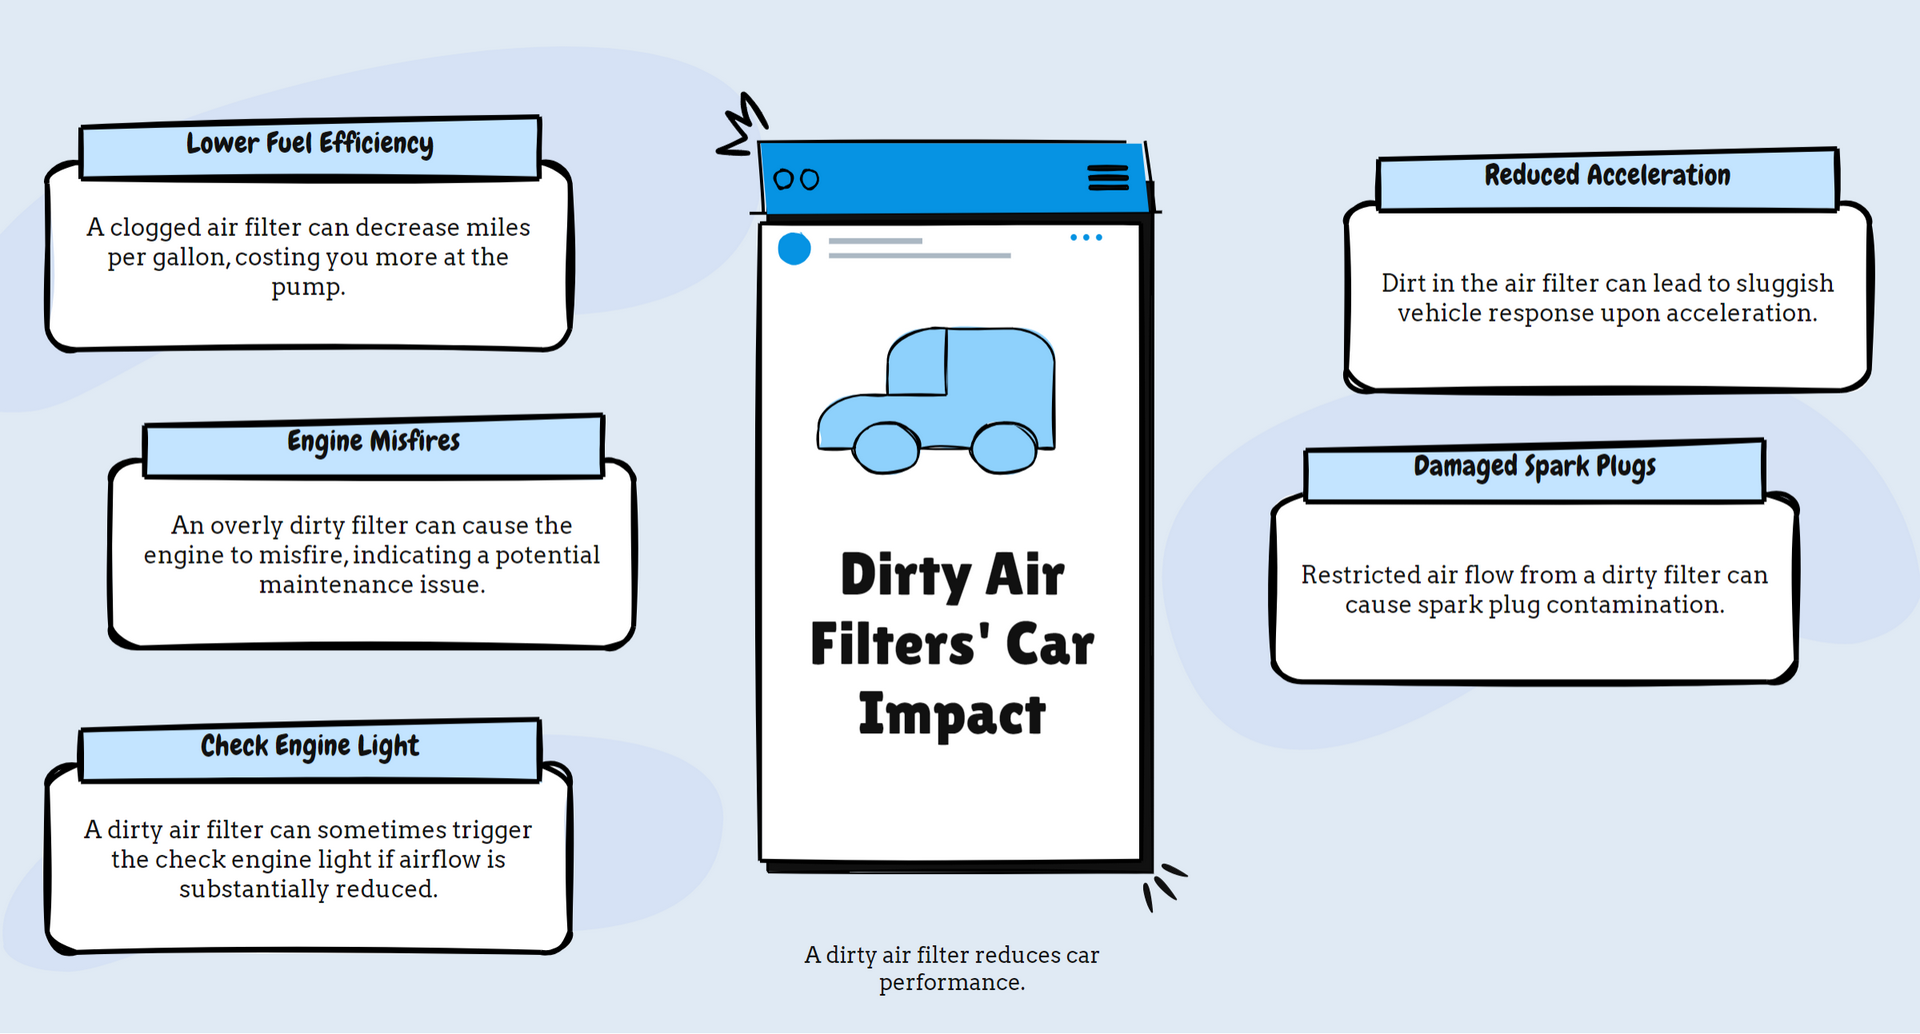 Dirty Air Filters' Car Impact